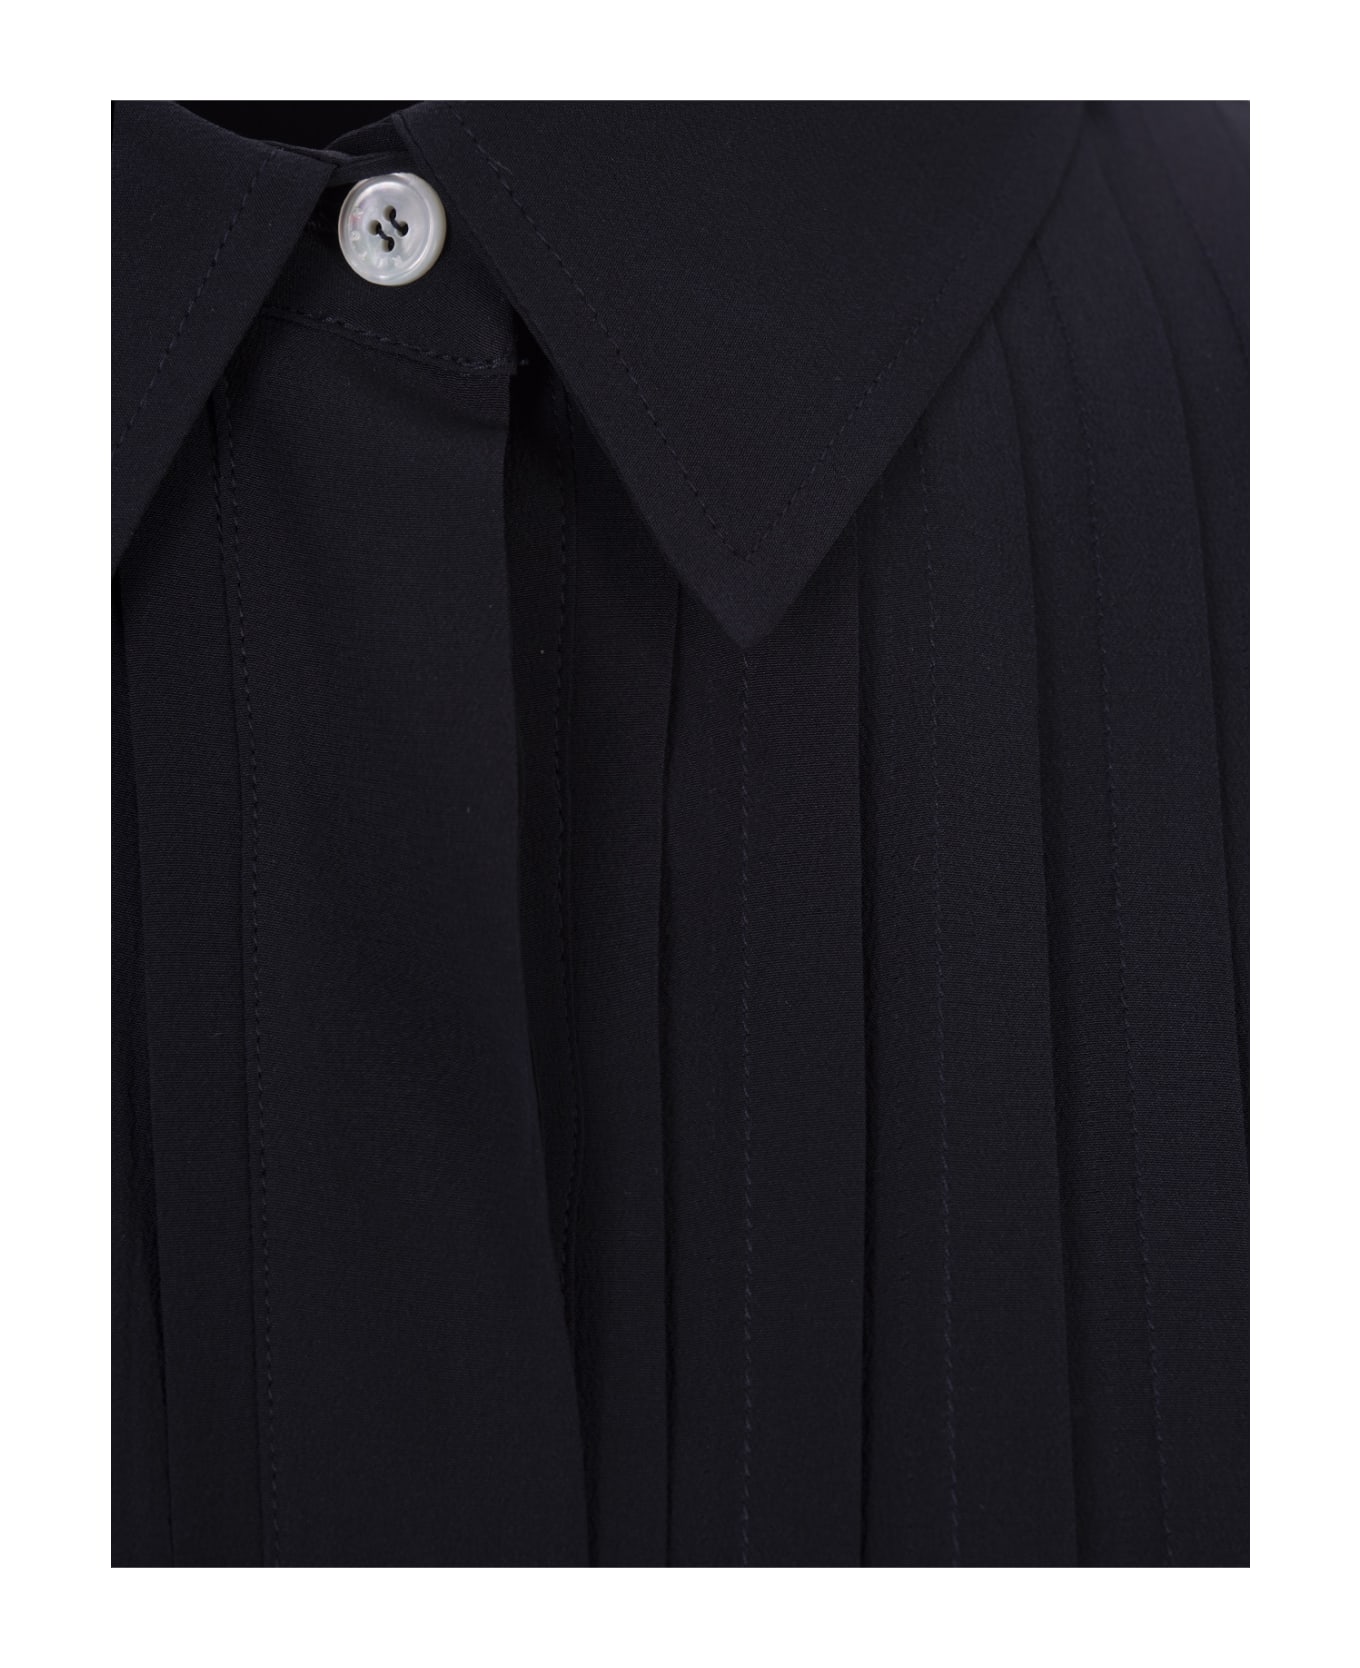 Kiton Black Silk Shirt Long Dress With Pleating - Black